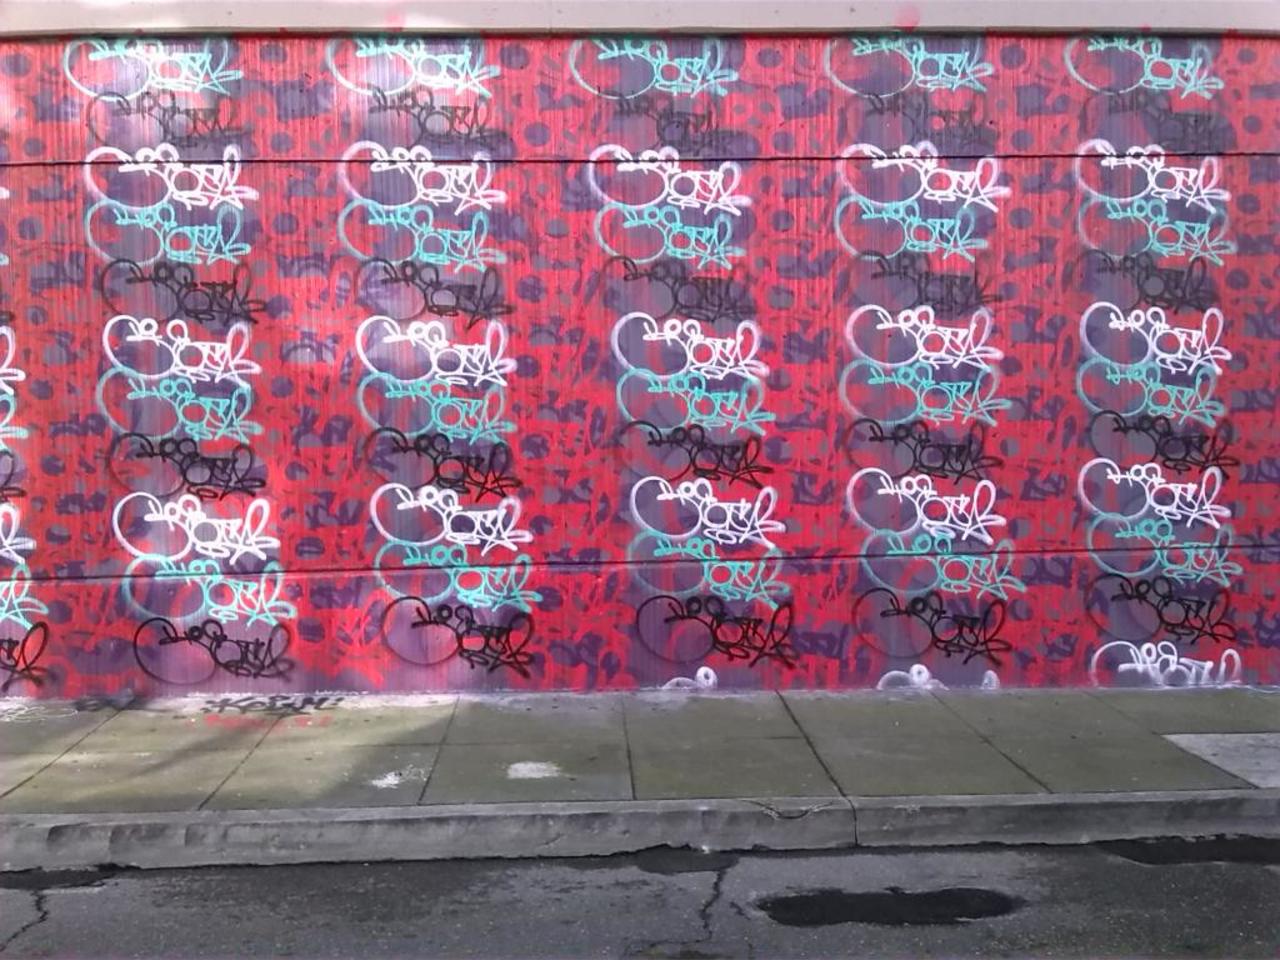 #SanFrancisco #streetart #mural #graffiti http://t.co/EbYxEX1oKA